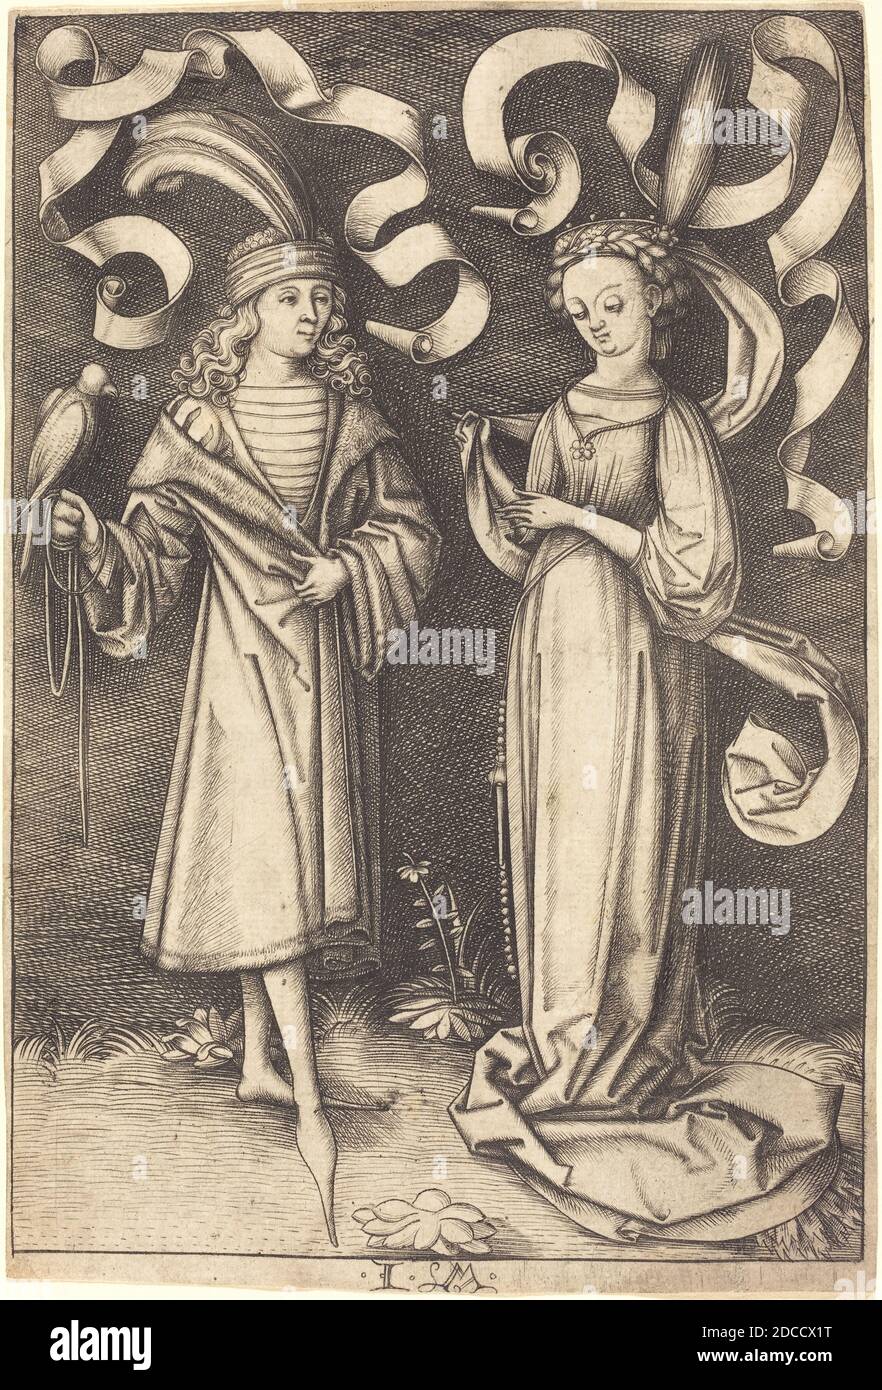 Israhel van Meckenem, (artist), German, c. 1445 - 1503, The Falconer and Noble Lady, Scenes of Daily Life, (series), c. 1495/1503, engraving Stock Photo